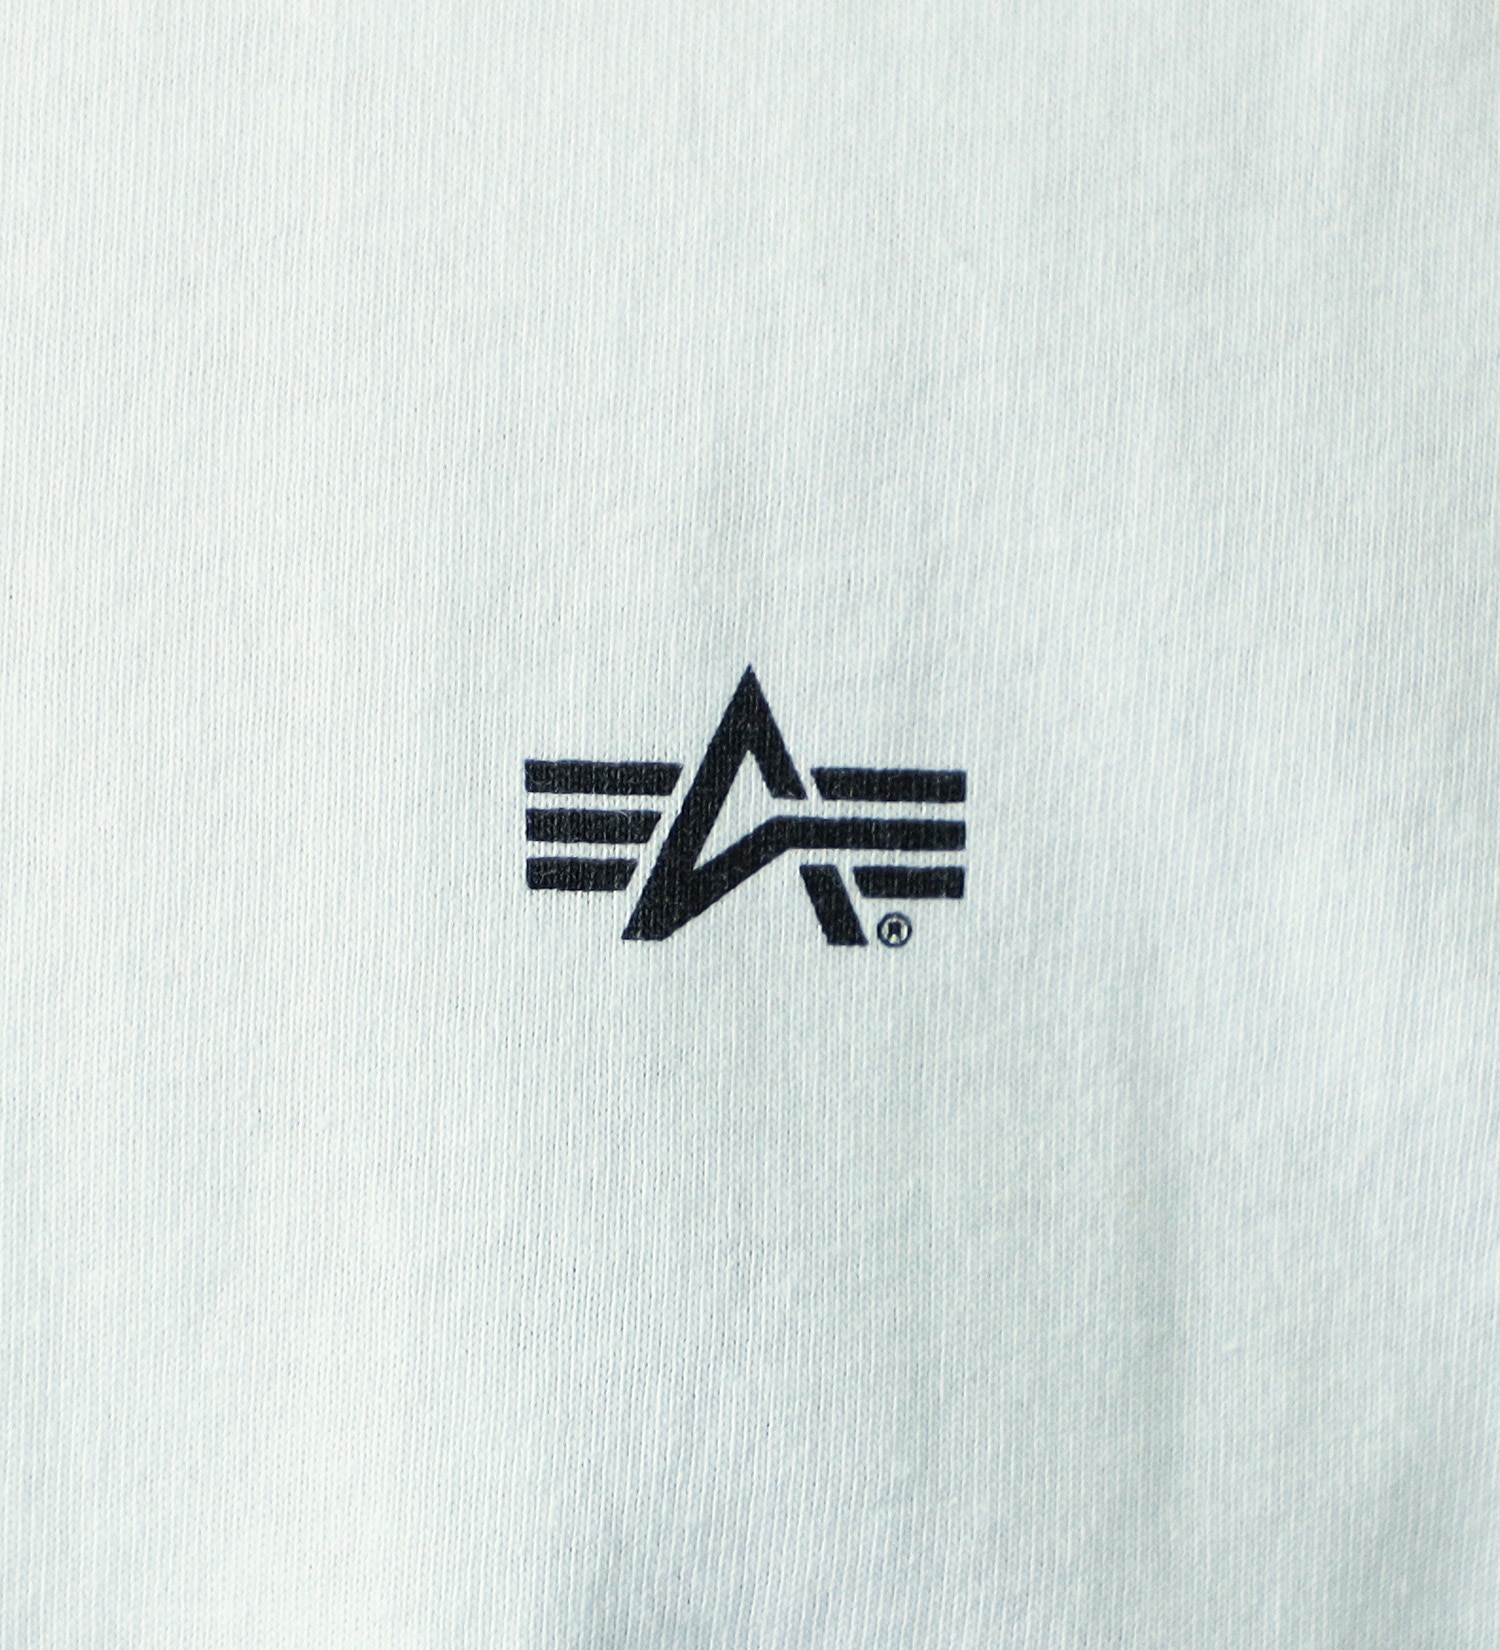 ALPHA(アルファ)のFLYING-Aマーク バックプリントTシャツ 半袖|トップス/Tシャツ/カットソー/メンズ|ホワイト